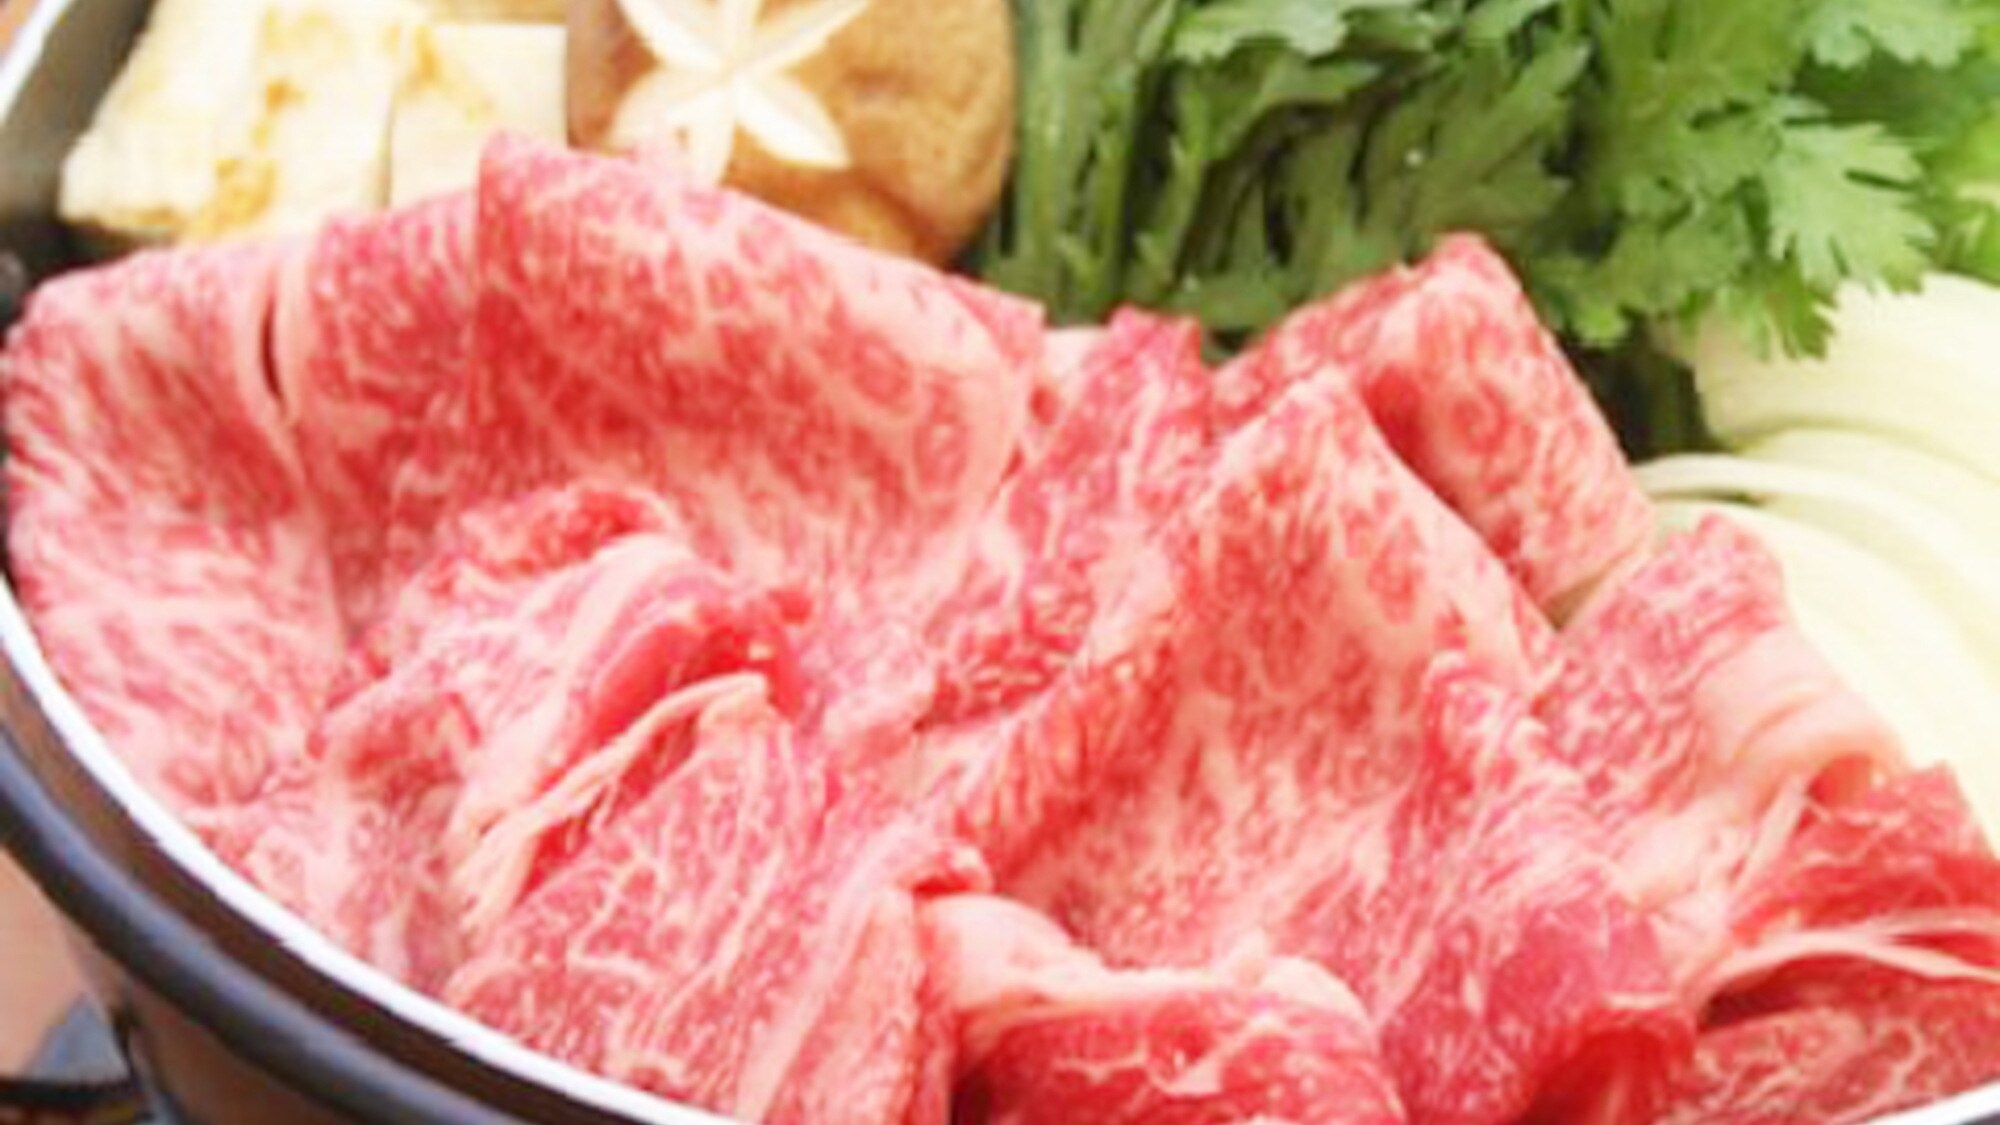 ・ Tajima beef sukiyaki / The taste of Tajima beef spreads in your mouth